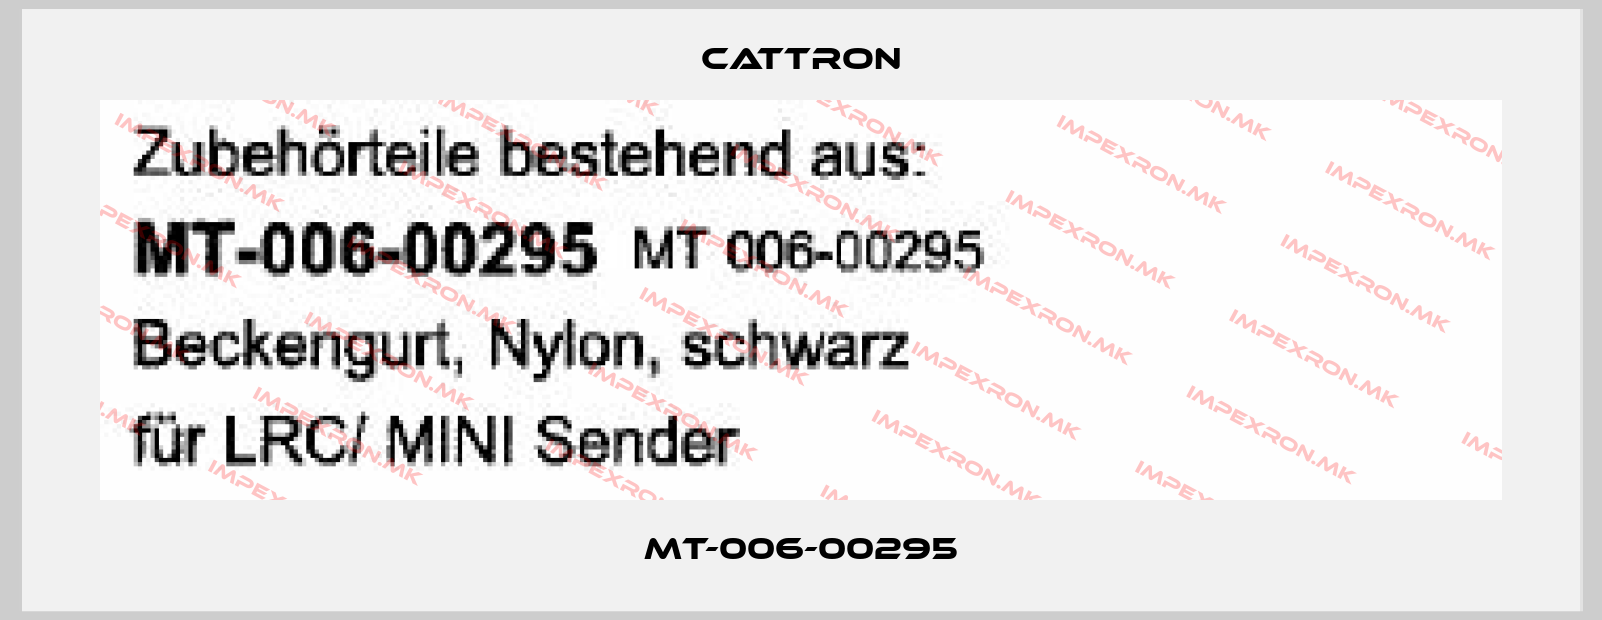 Cattron-MT-006-00295price